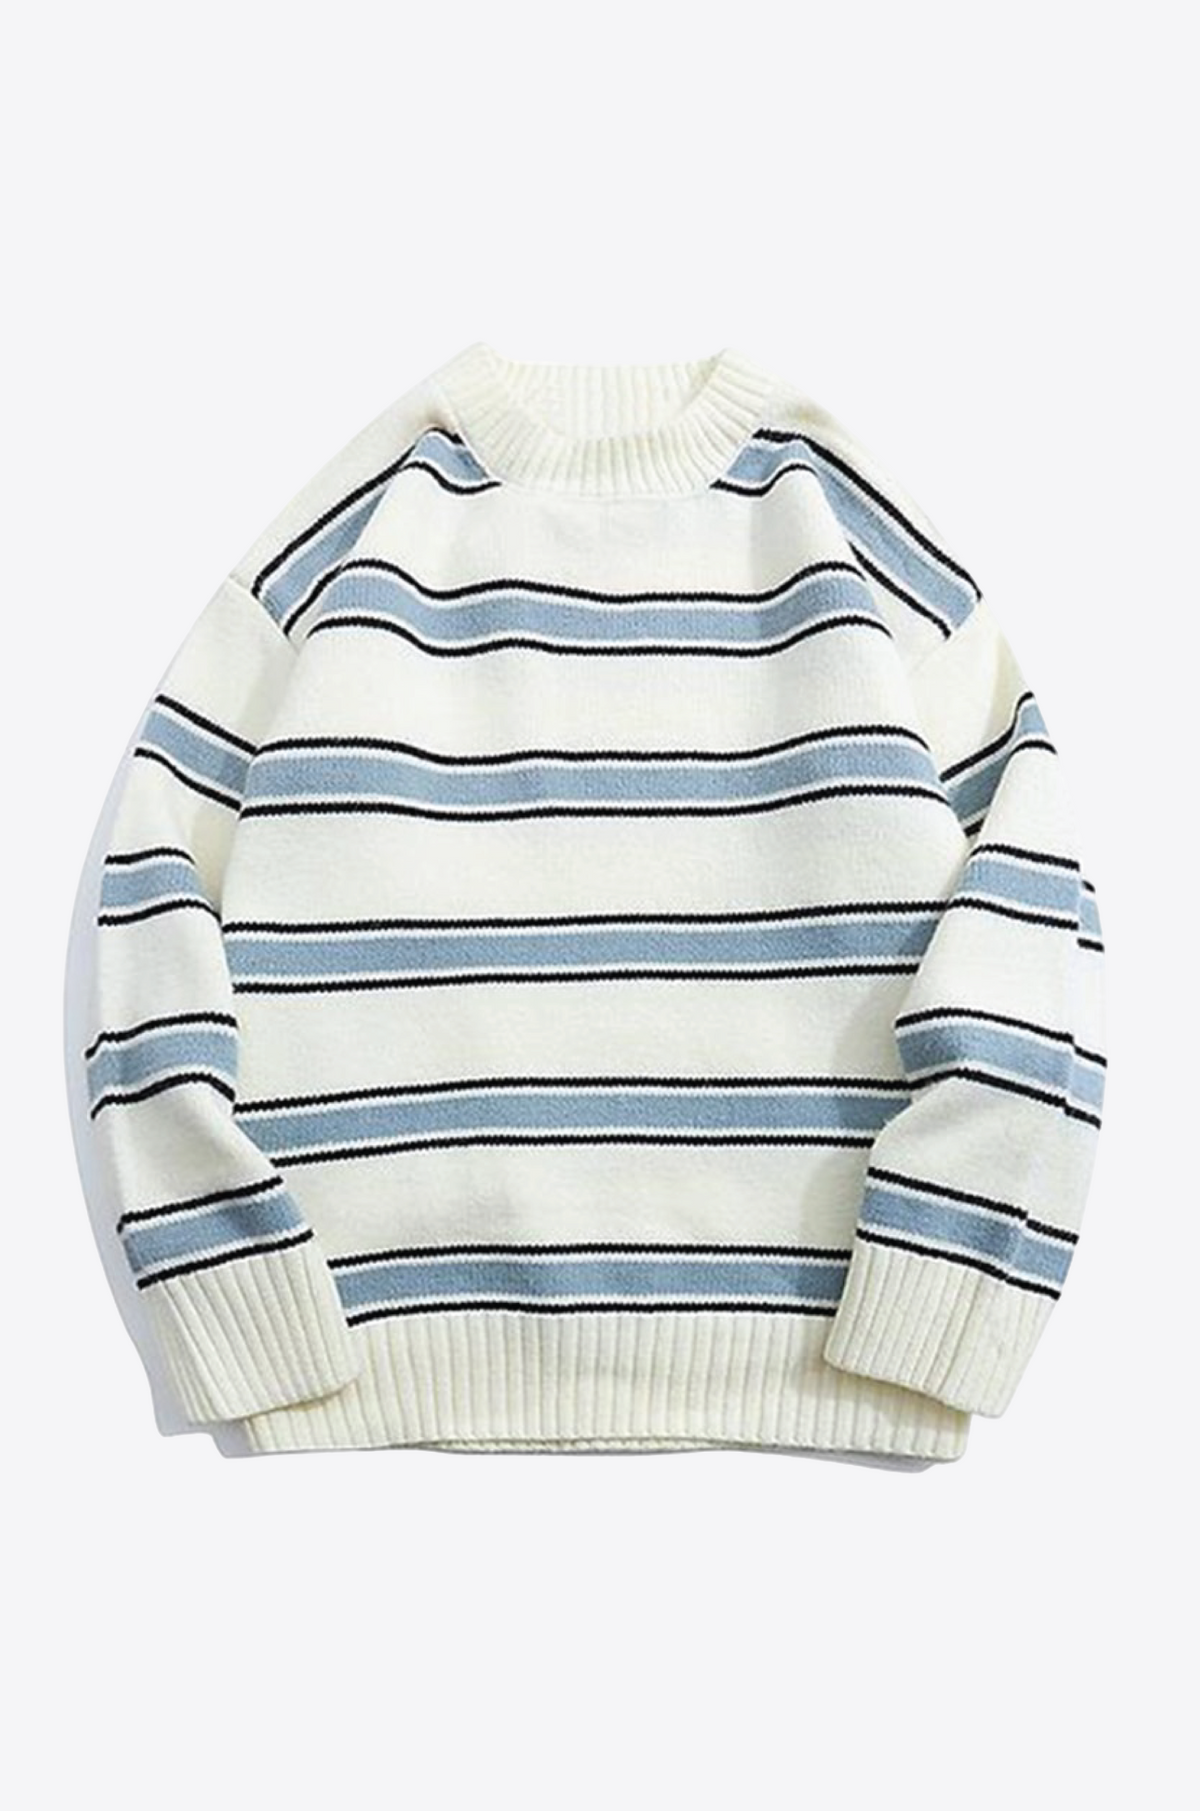 Azure Lake Stripes Wool Men's Sweater | Hypoallergenic - Allergy Friendly - Naturally Free